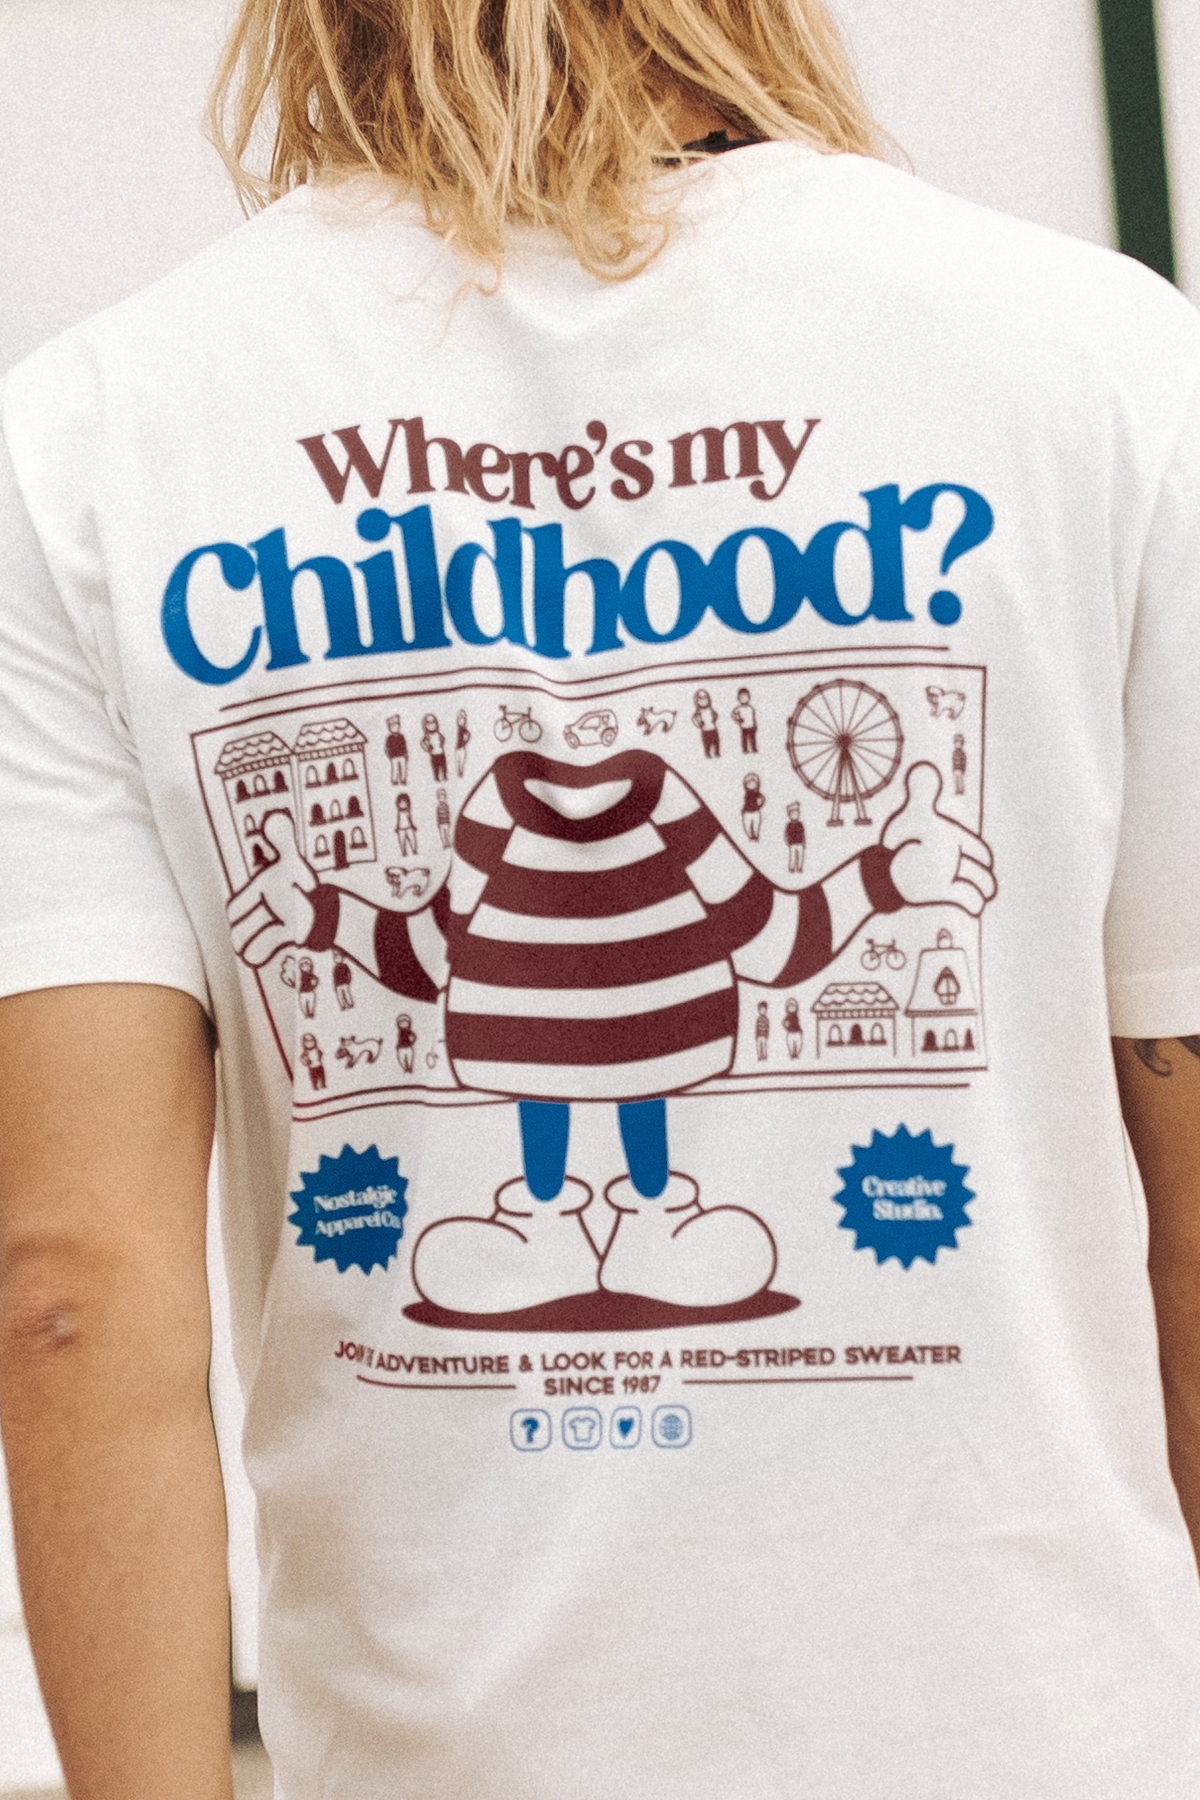 Where's my Childhood? | Camiseta OffWhite